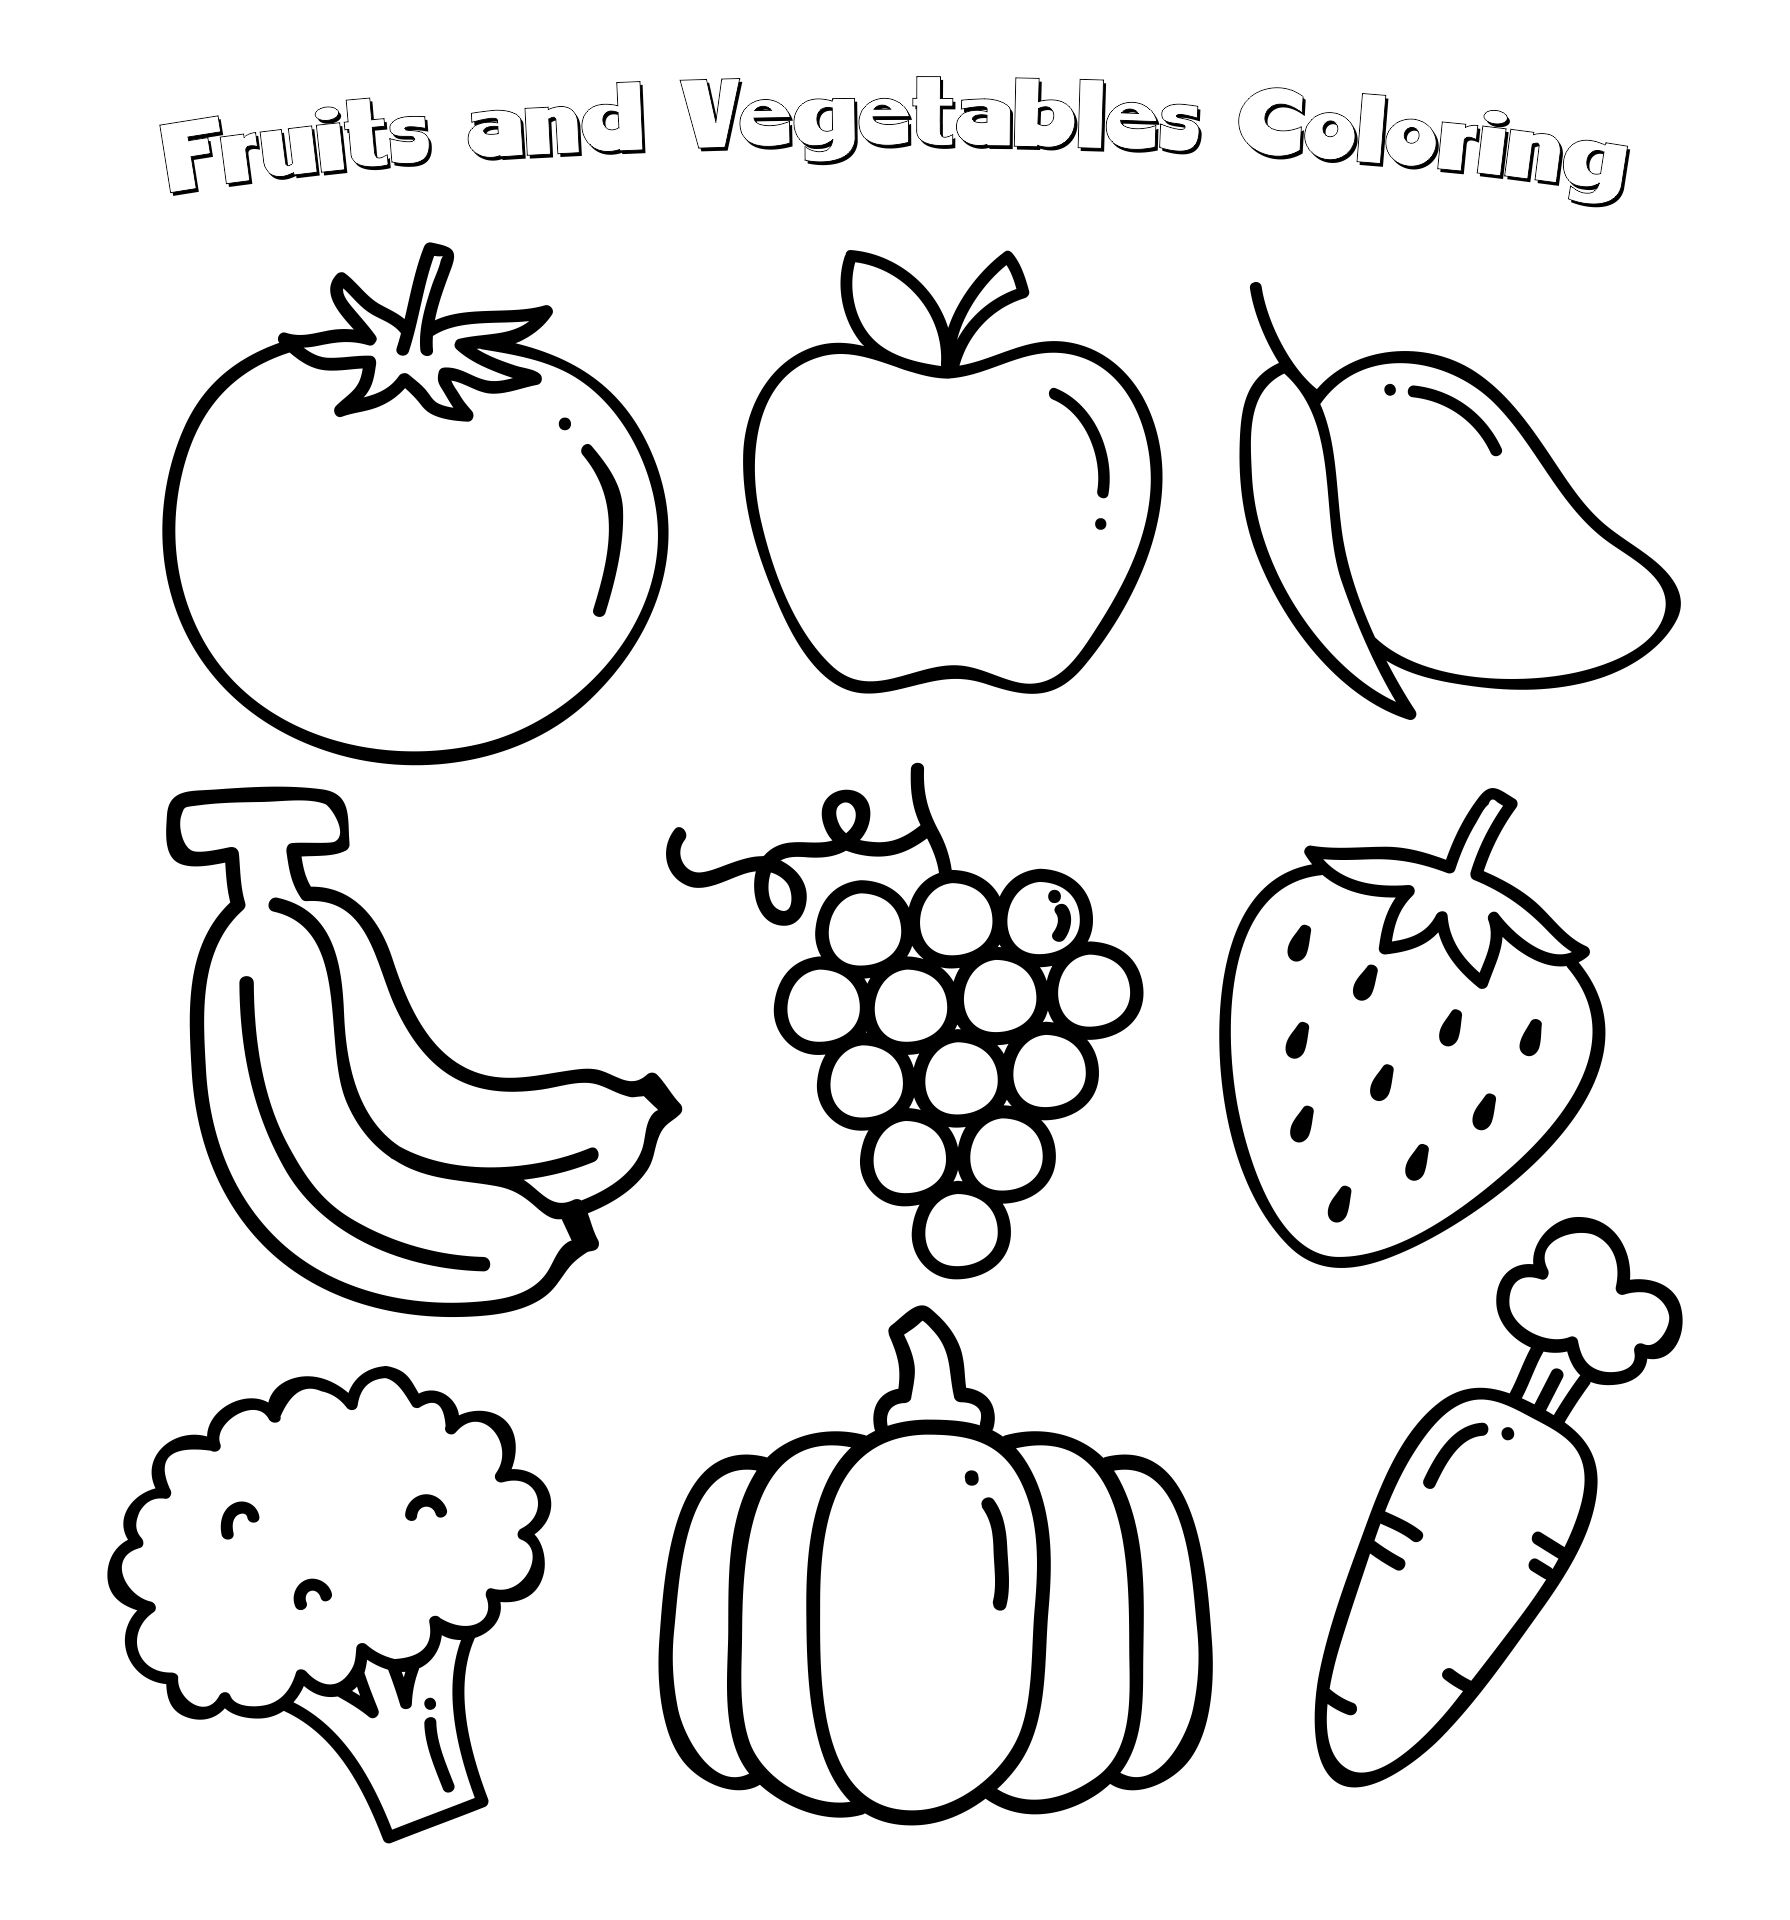 20 Best Free Printable Fruit And Vegetable Templates   printablee.com